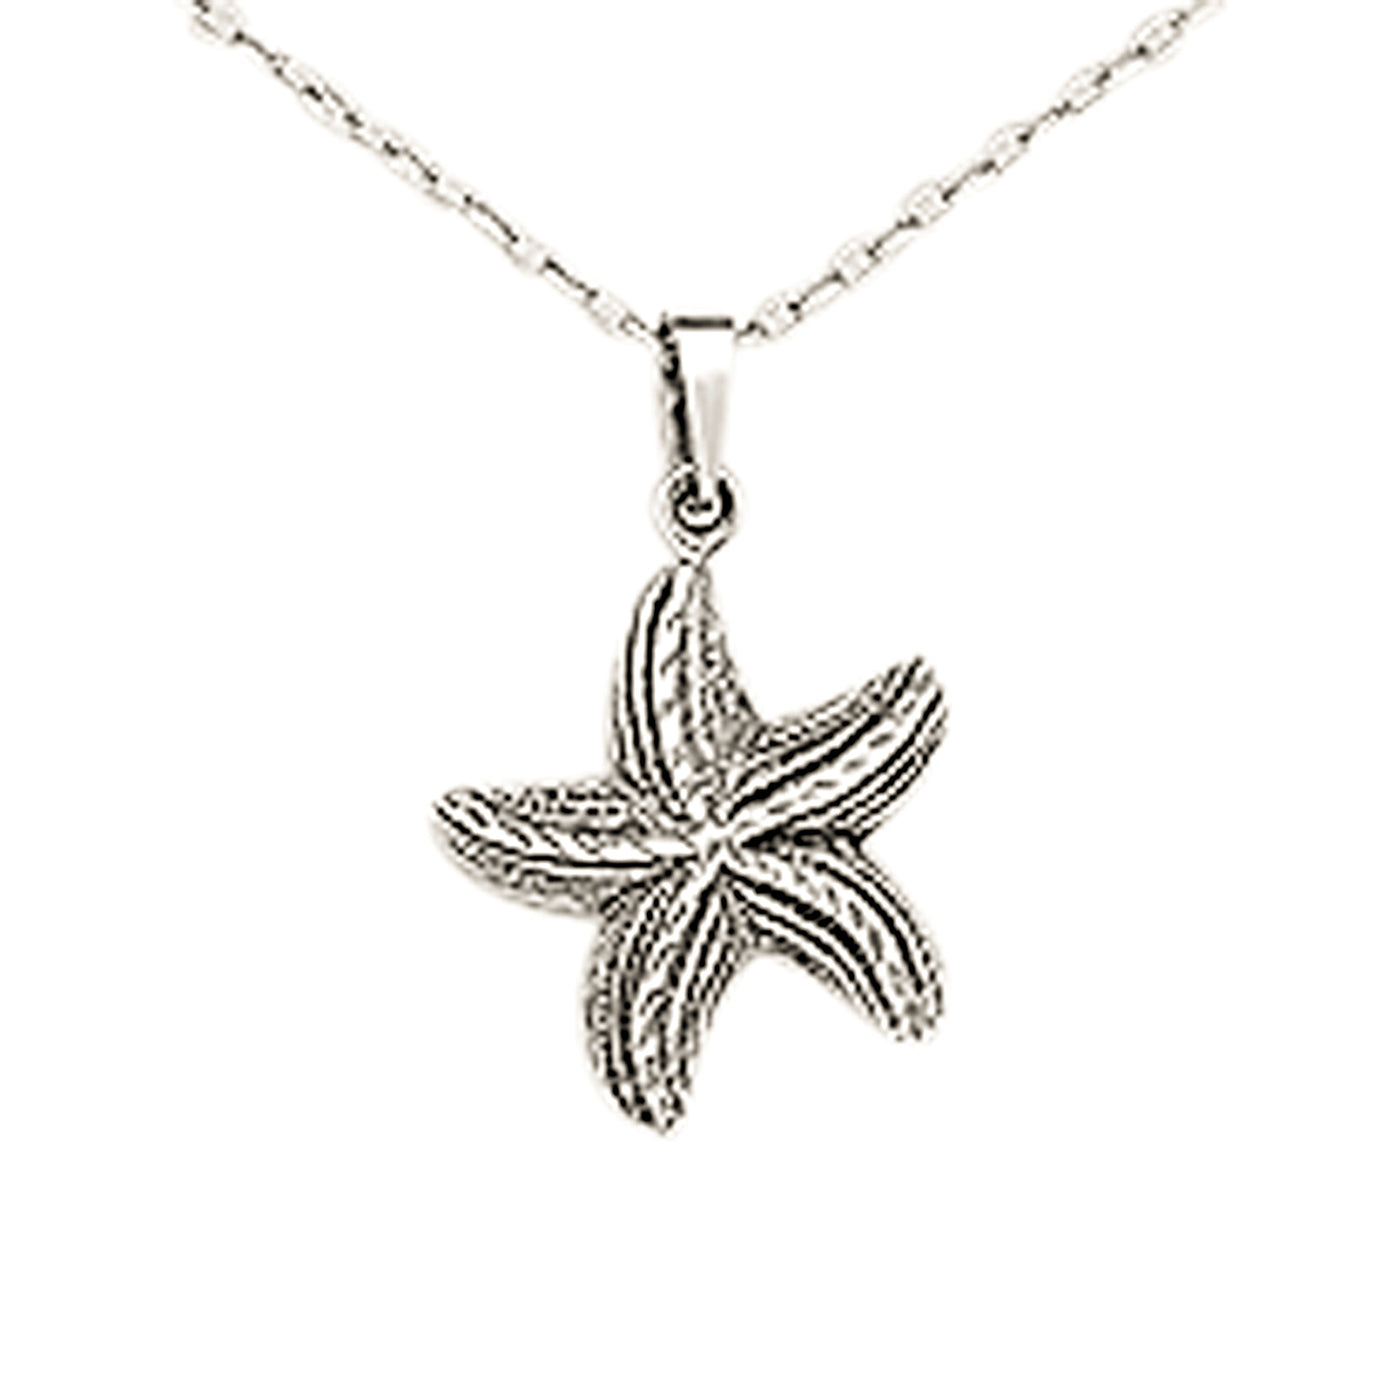 Oxidized Starfish Pendant Necklace